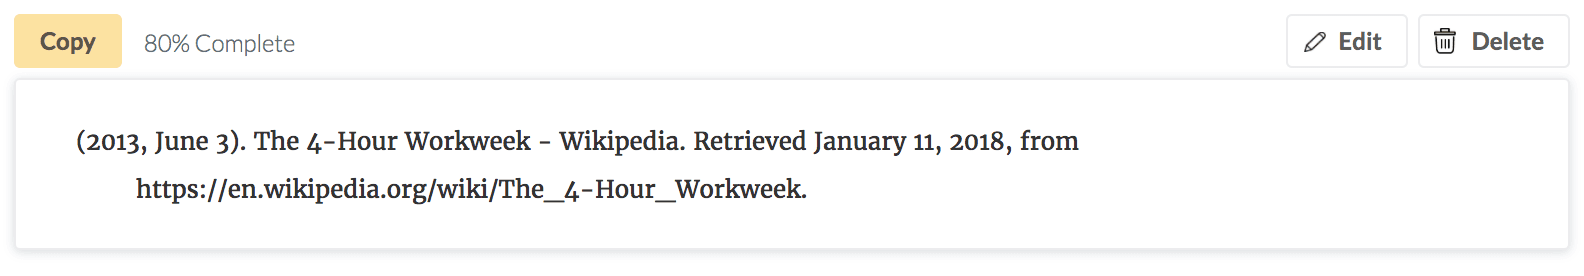 (2013, June 3). The 4-Hour Workweek - Wikipedia. Retrieved January 11, 2018, from https://en.wikipedia.org/wiki/The_4-Hour_Workweek.